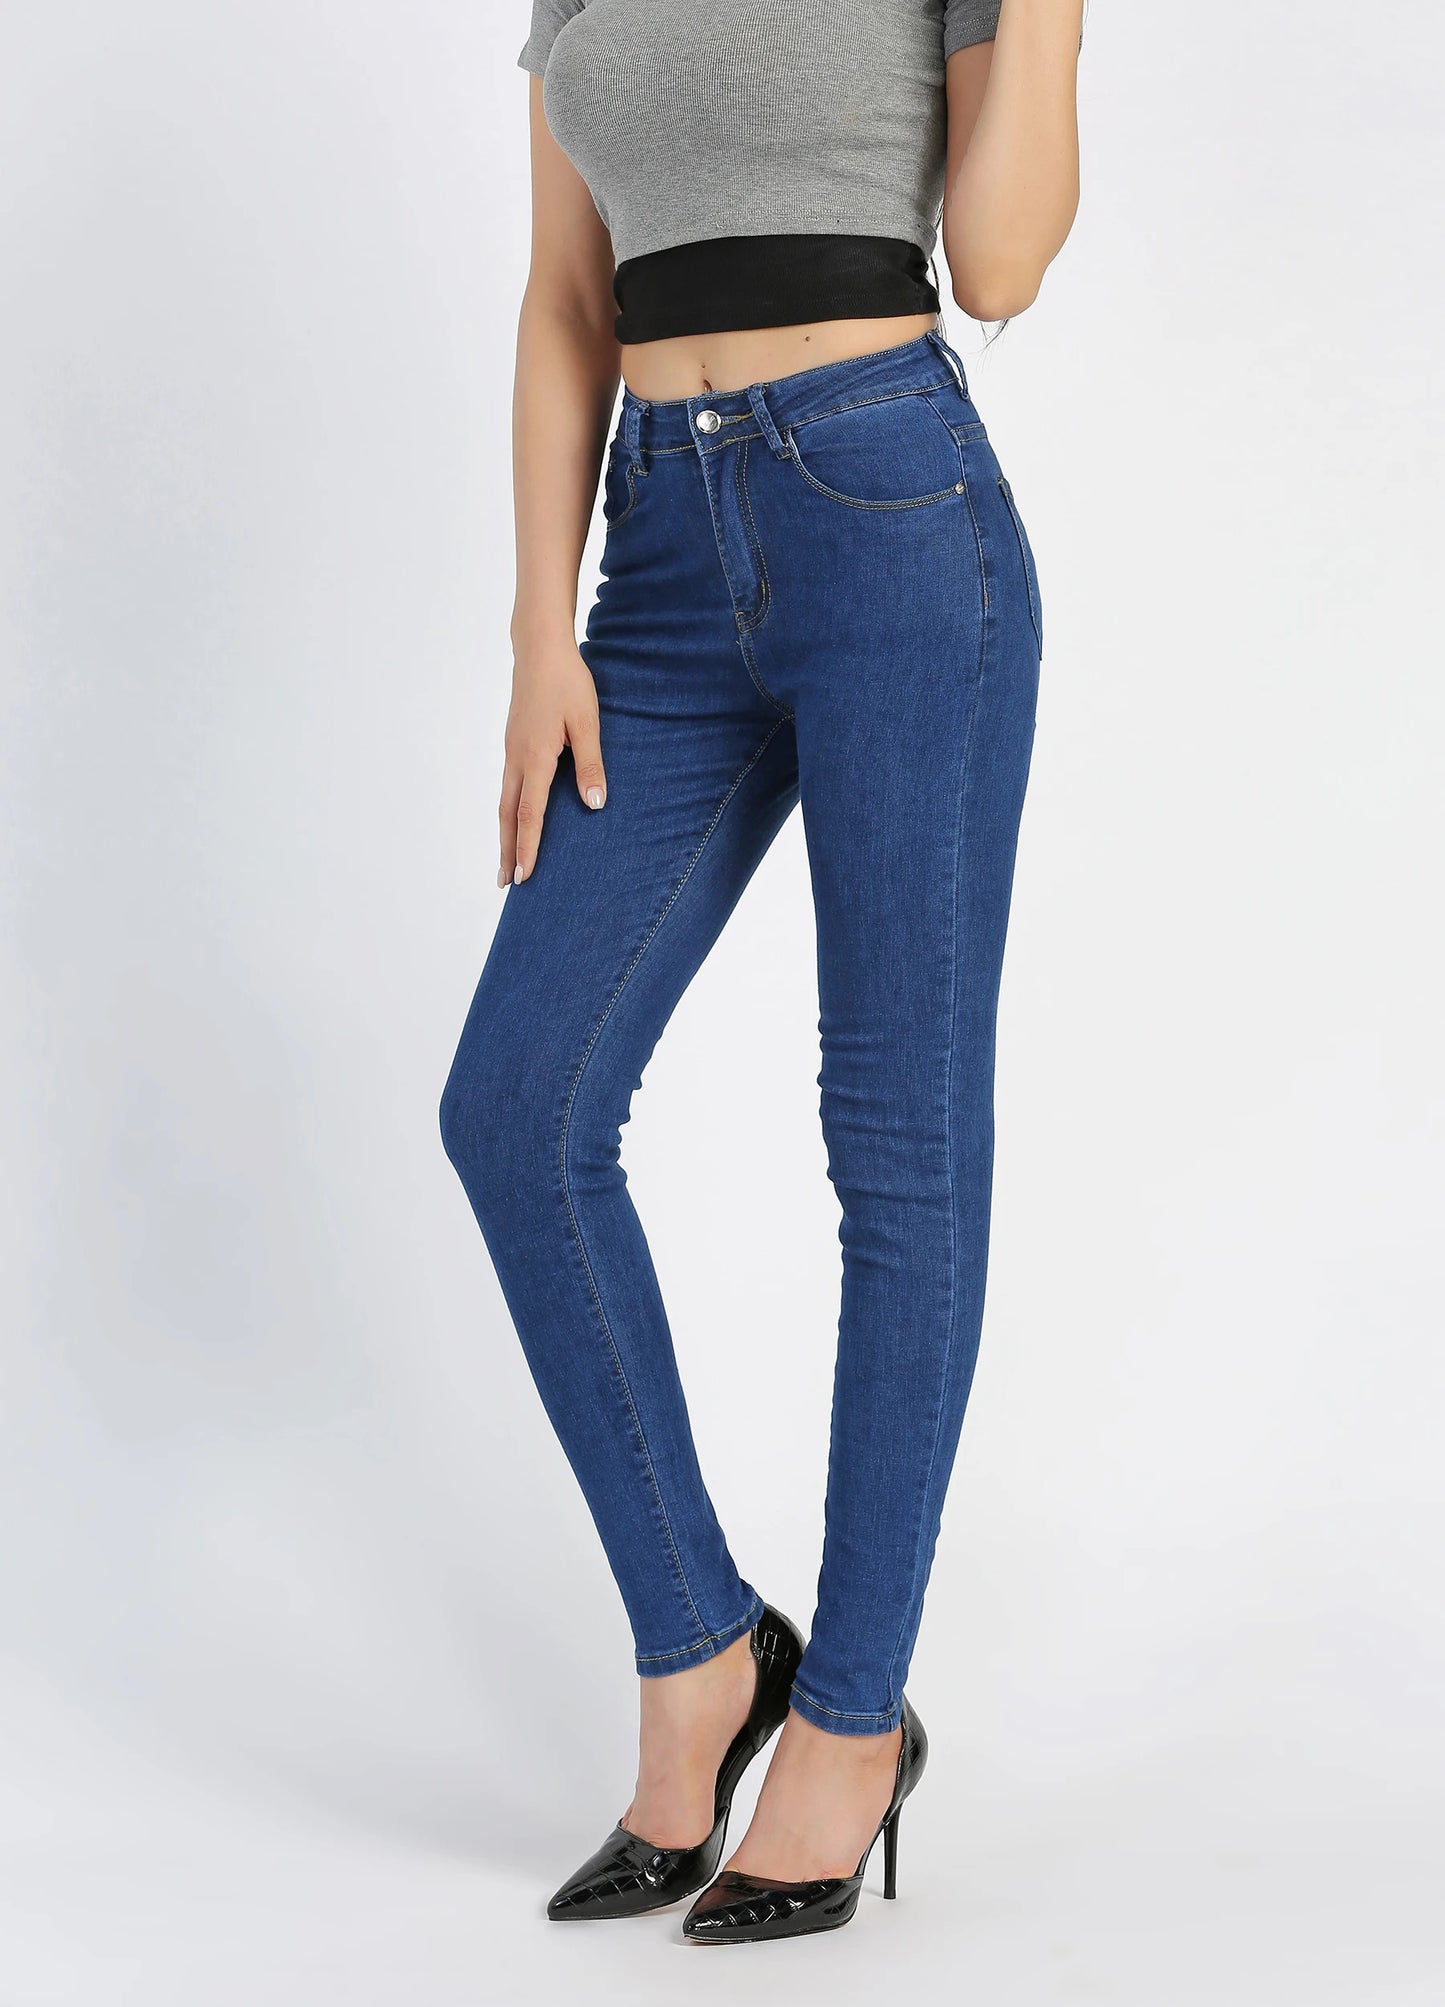 MECALA Women's High Waist Zip Closure Skinny Jeans-Dark Blue